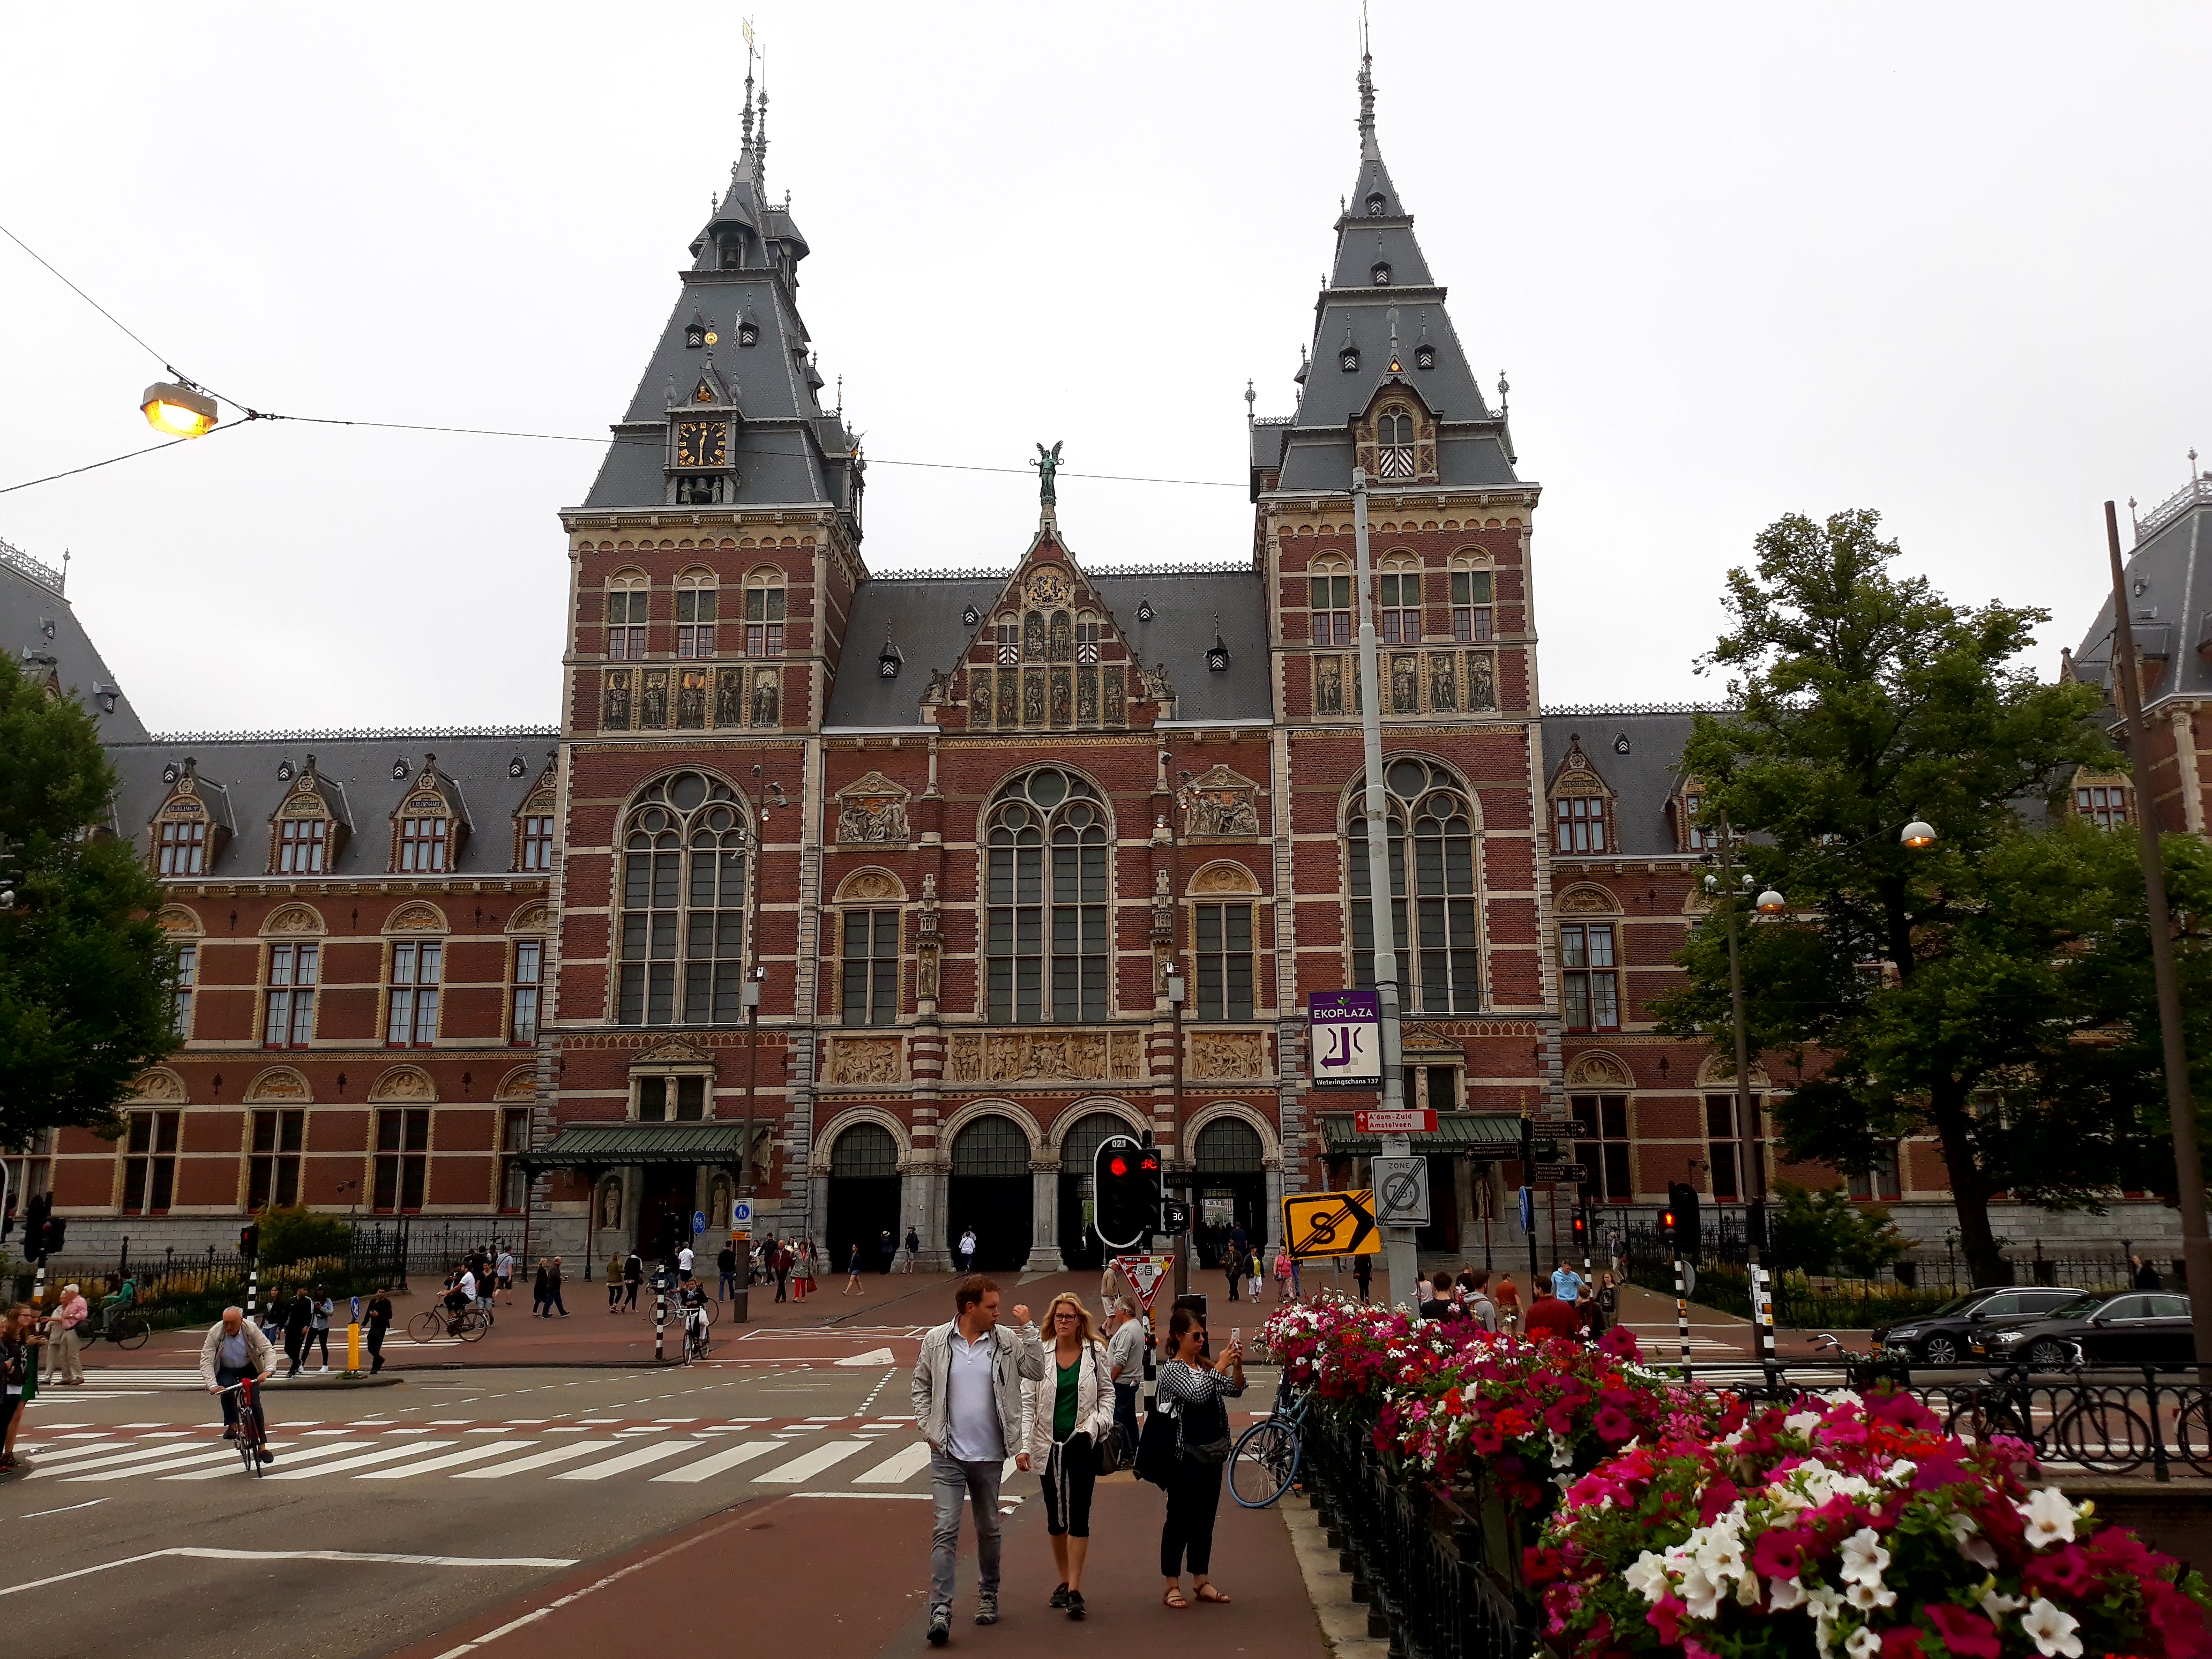 U zoekt een erkende elektricien uit  Amsterdam? Allersnelste Nanie (020-6716213) verhelpt stroomstoring!